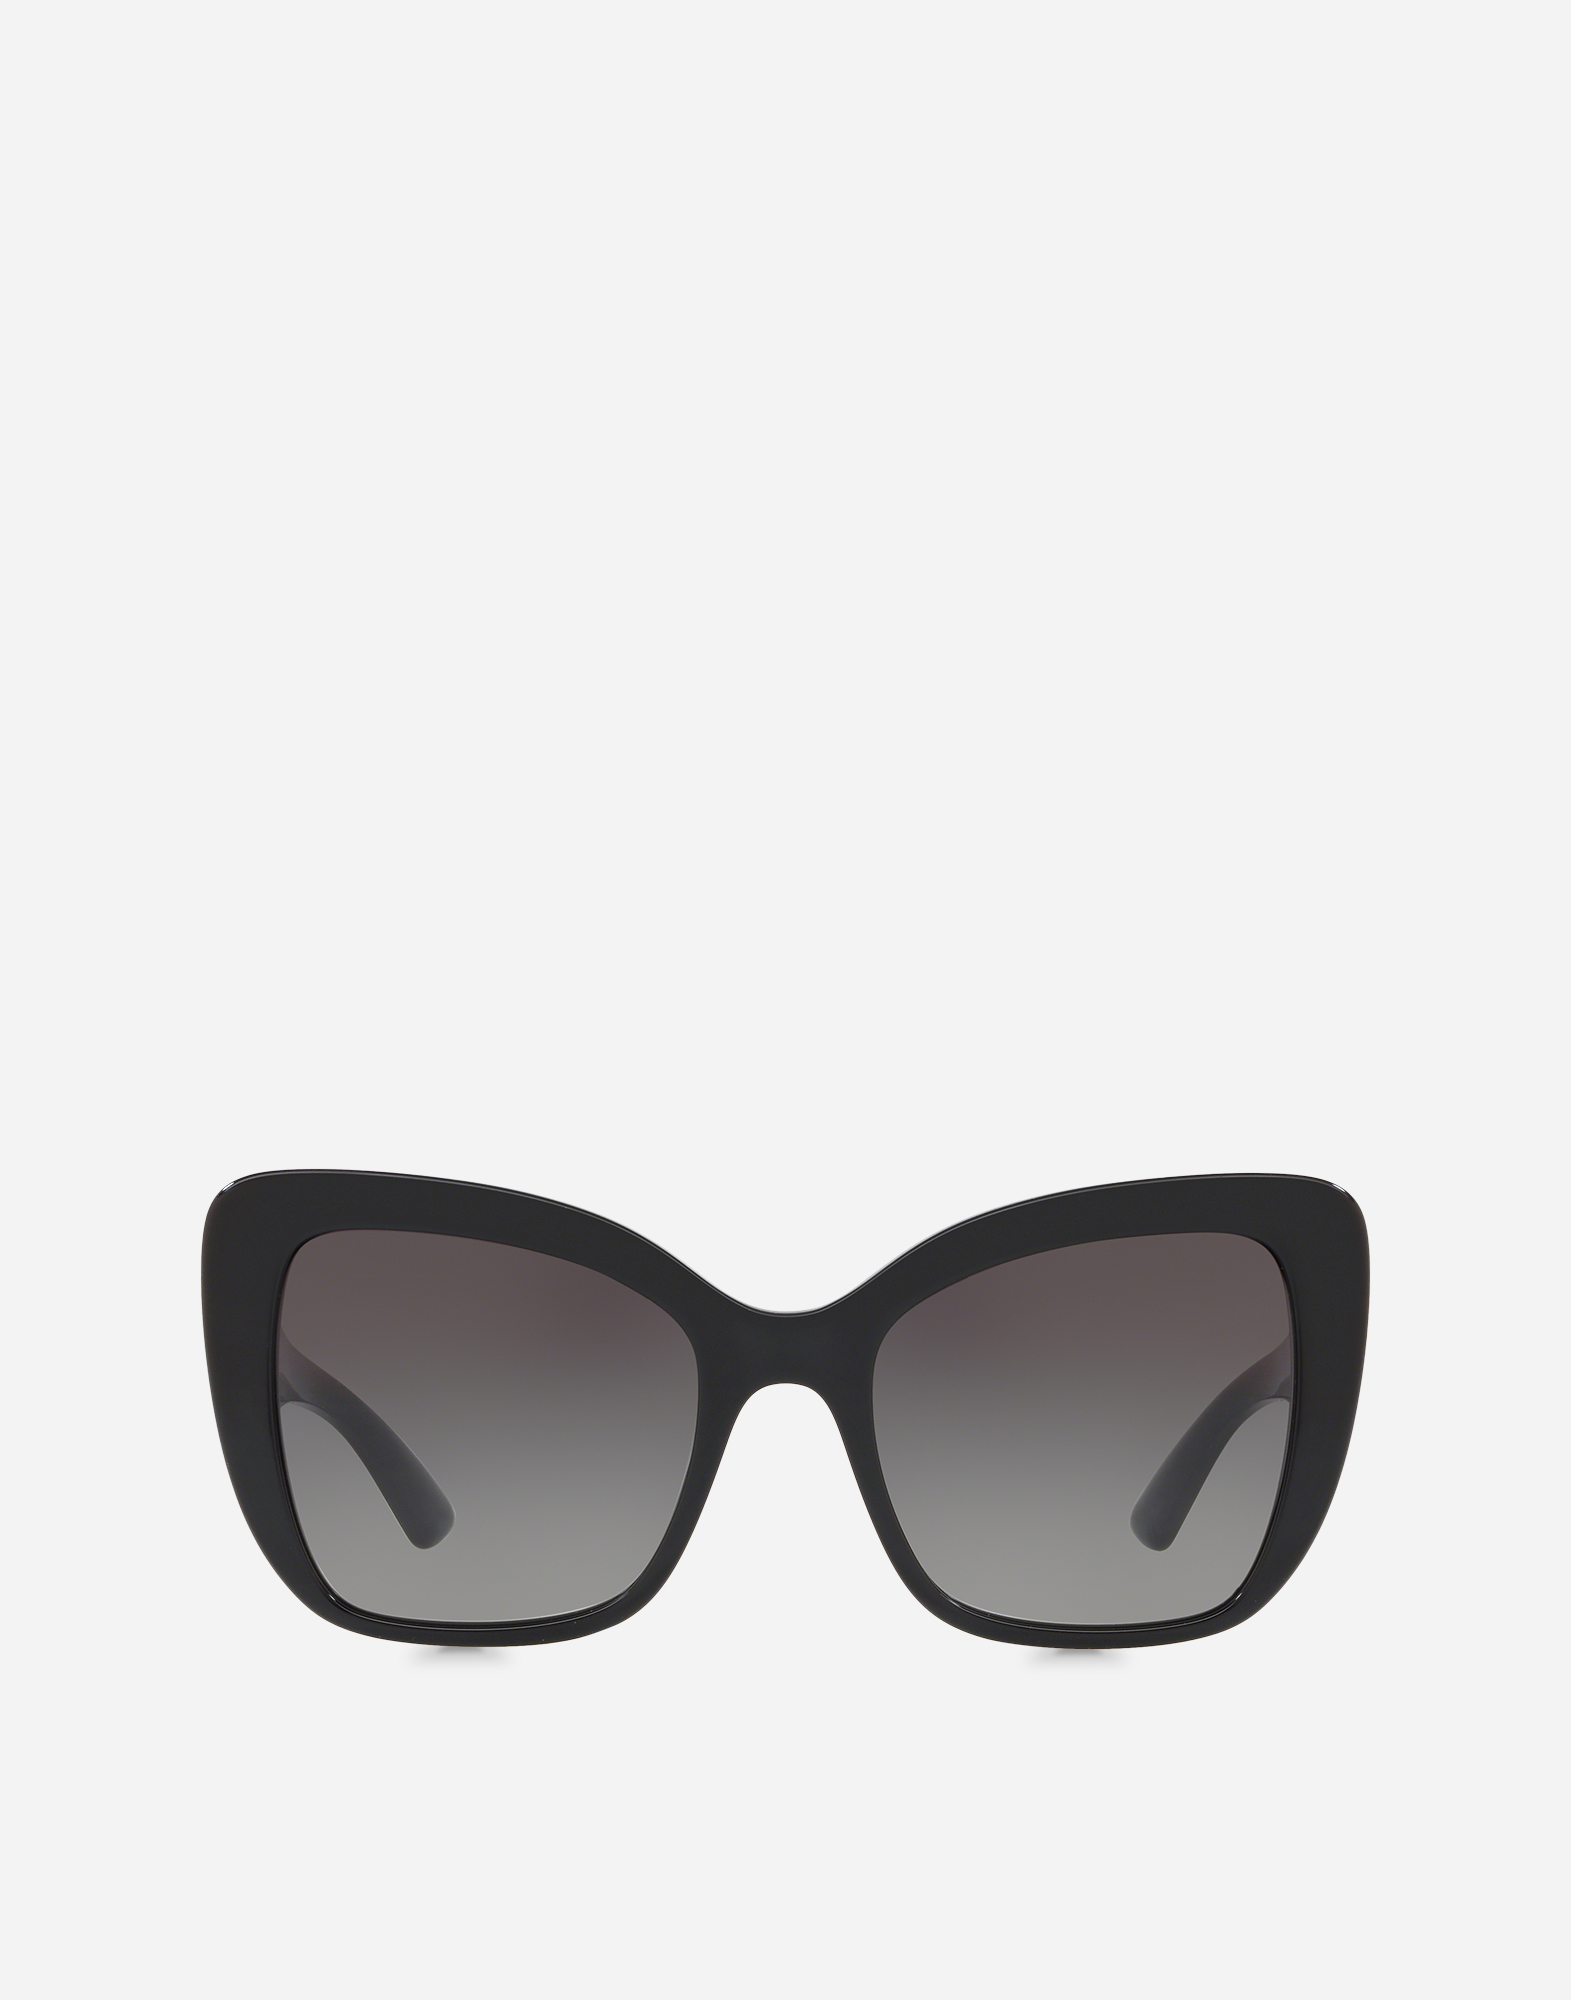 Half-print sunglasses in Black